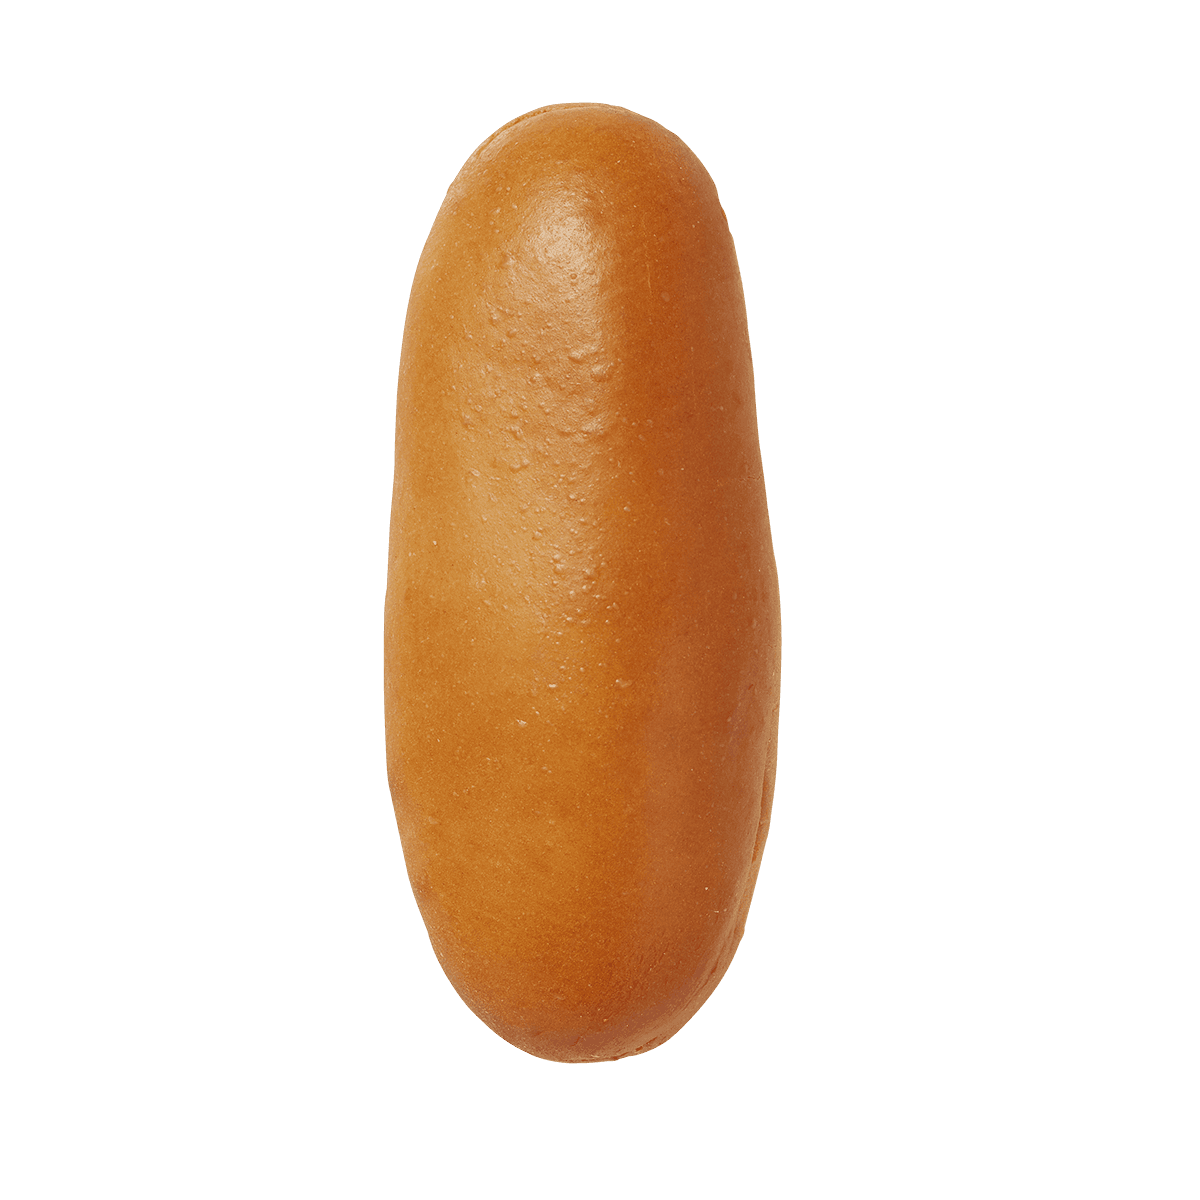 Brioche-style hot dog bun Top